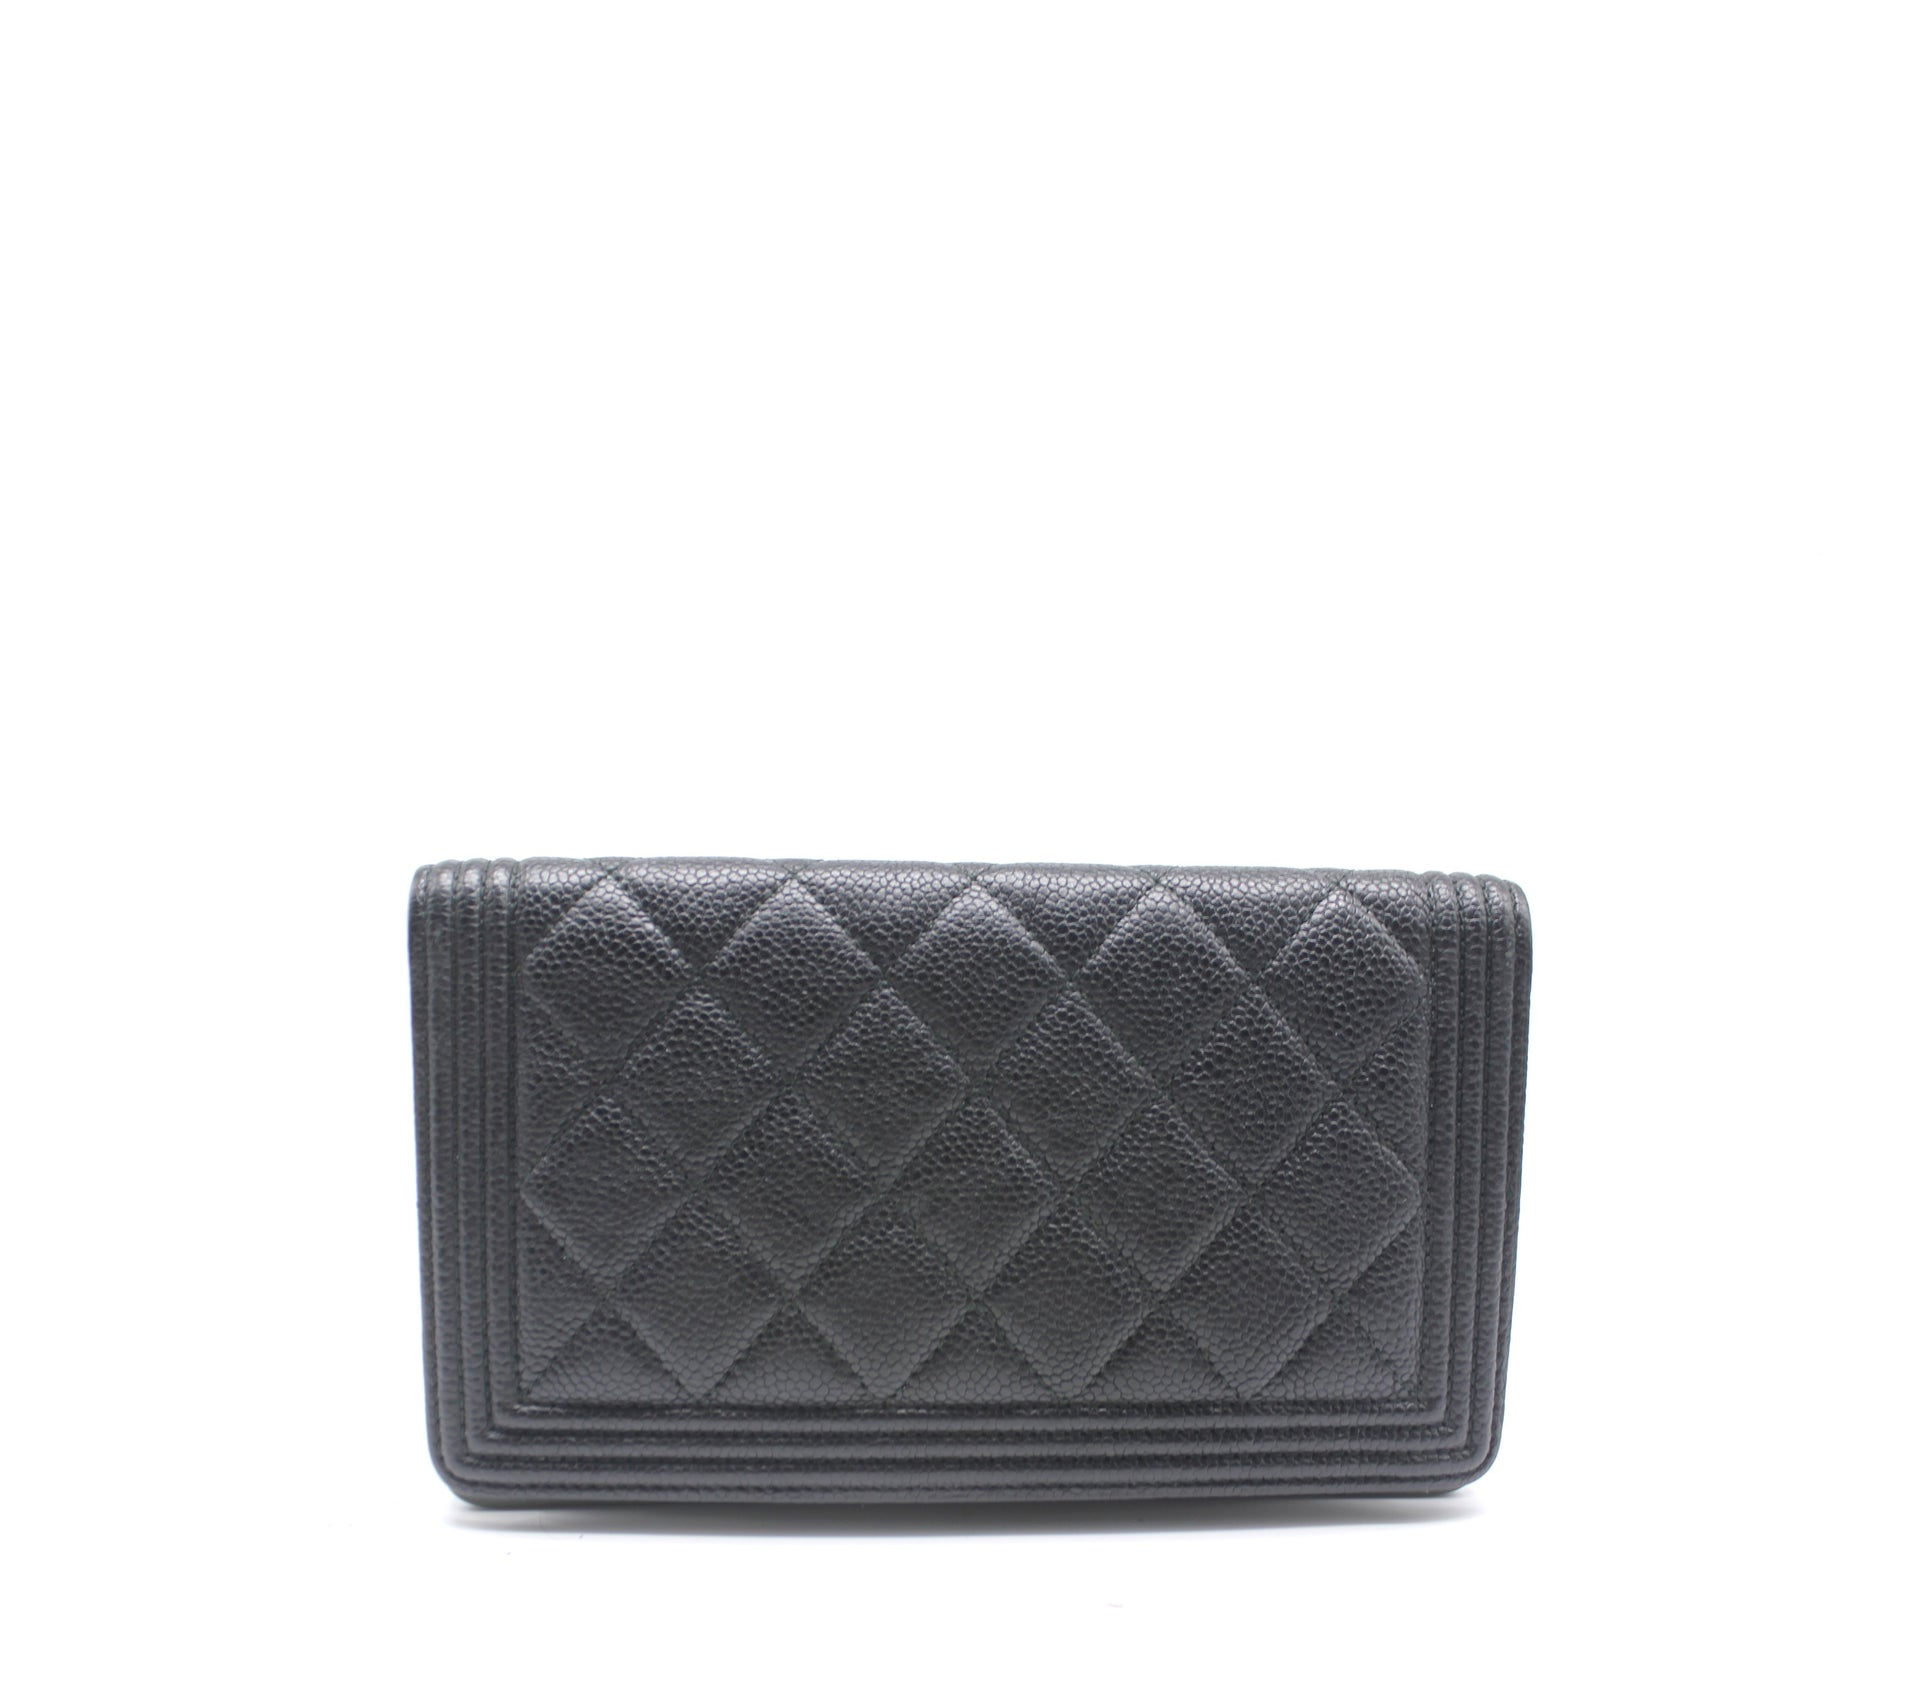 Chanel Quilted Lambskin Leather Boy L Yen Wallet